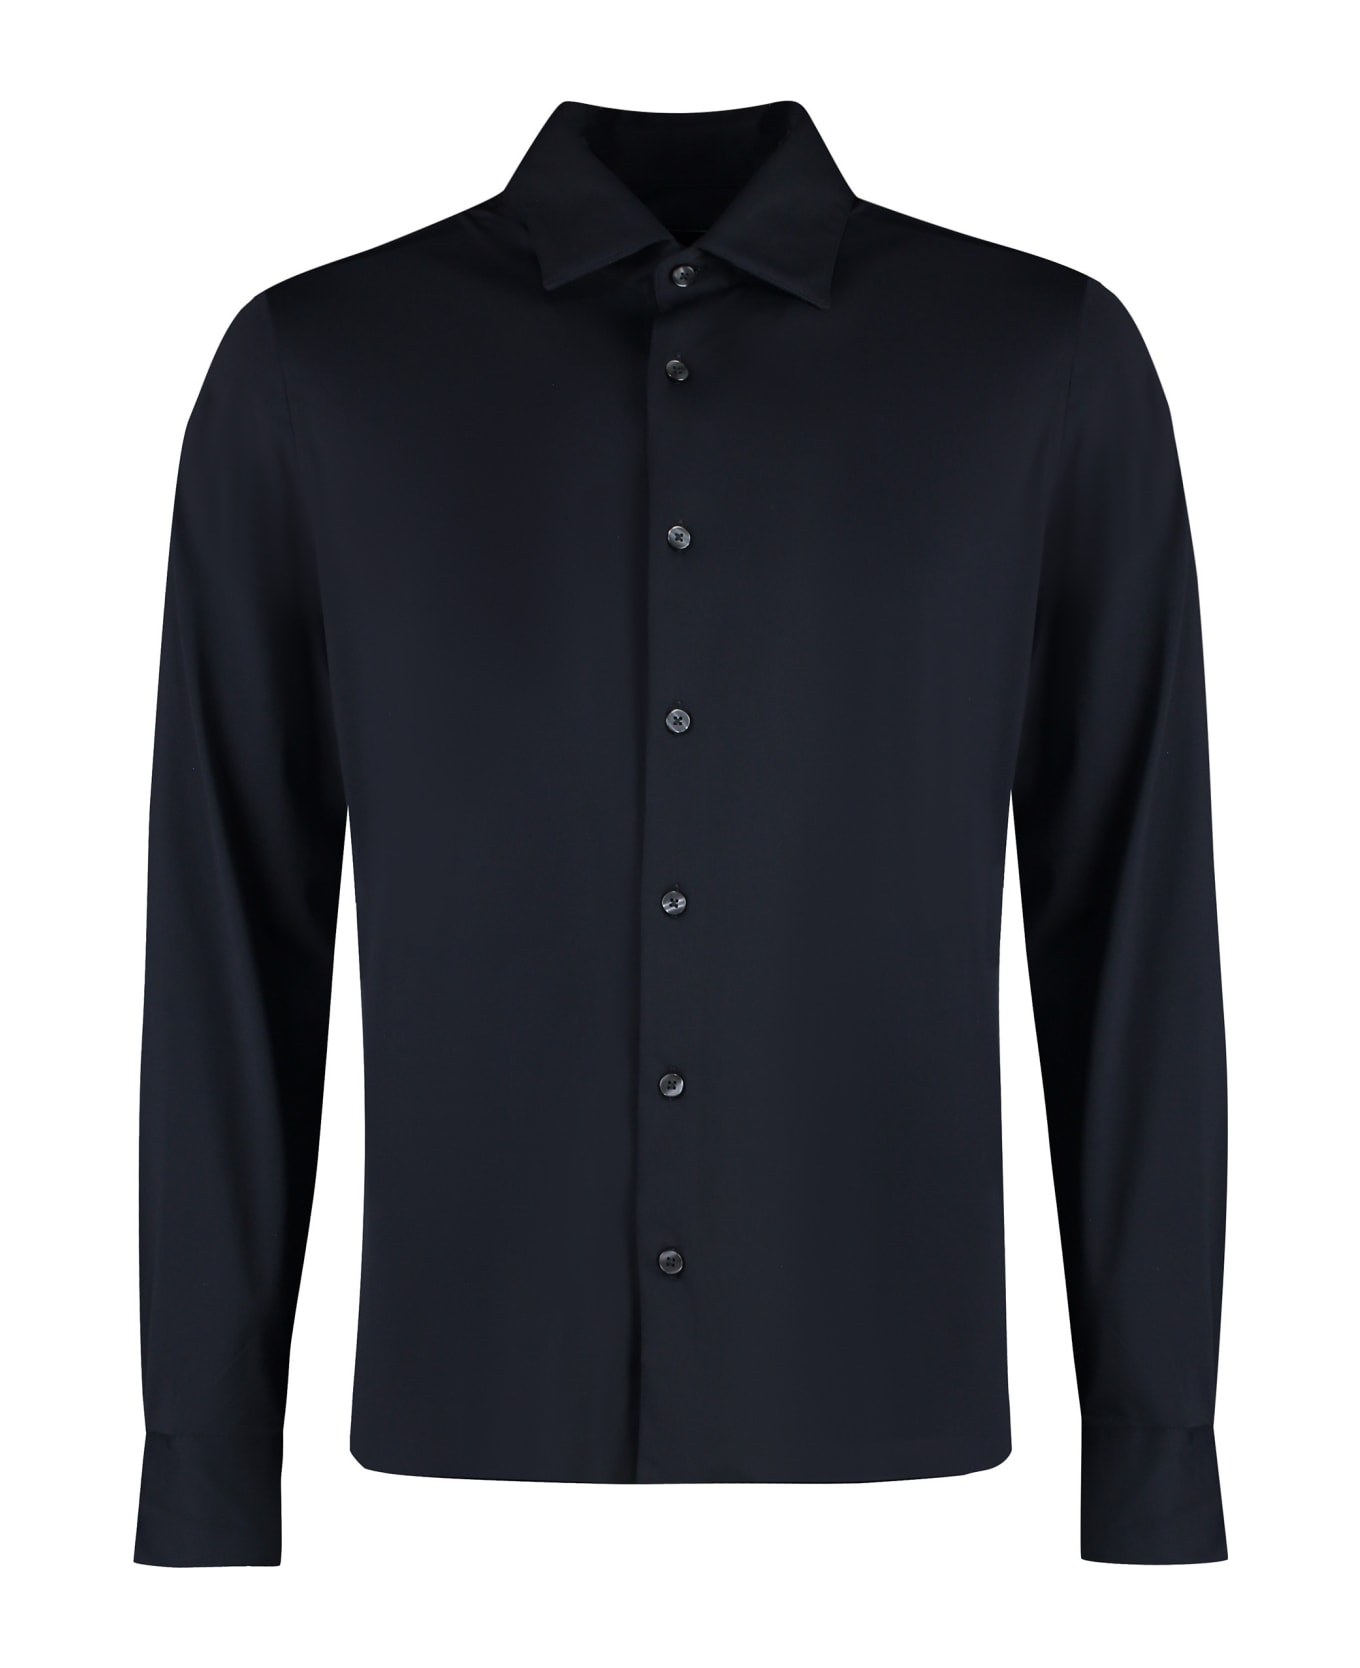 RRD - Roberto Ricci Design Technical Fabric Shirt - Blue Black